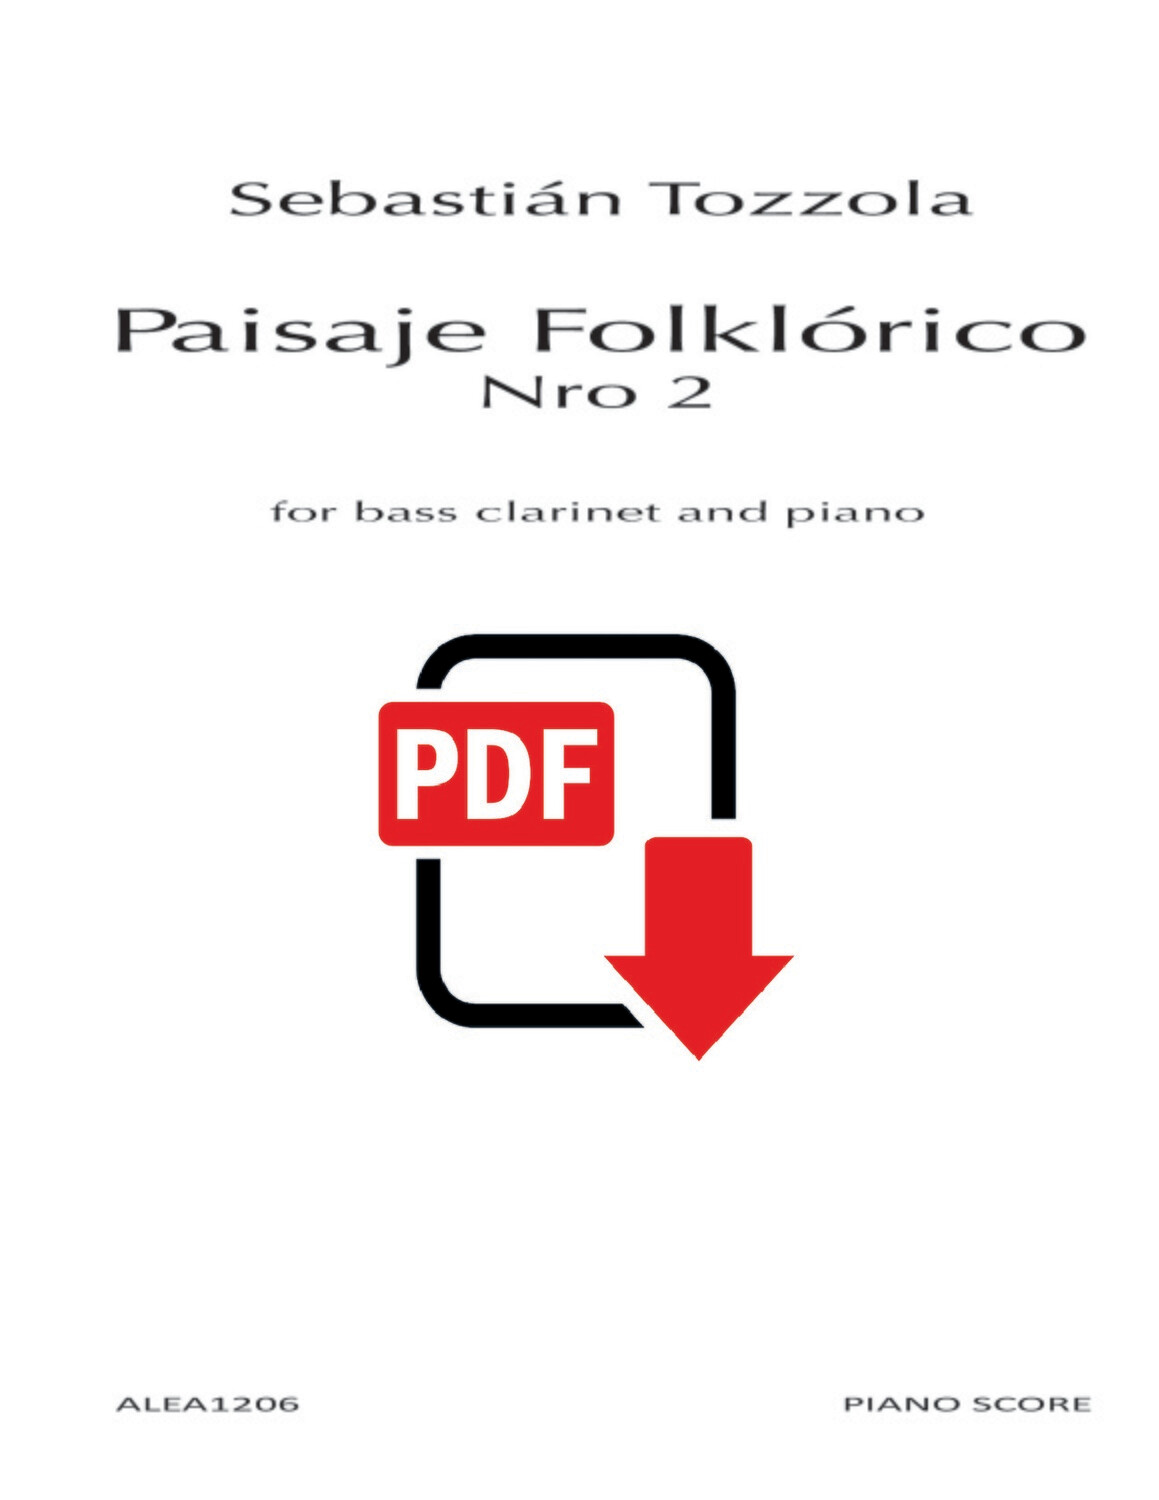 Tozzola: Paisaje Folklorico nro.2 (PDF)